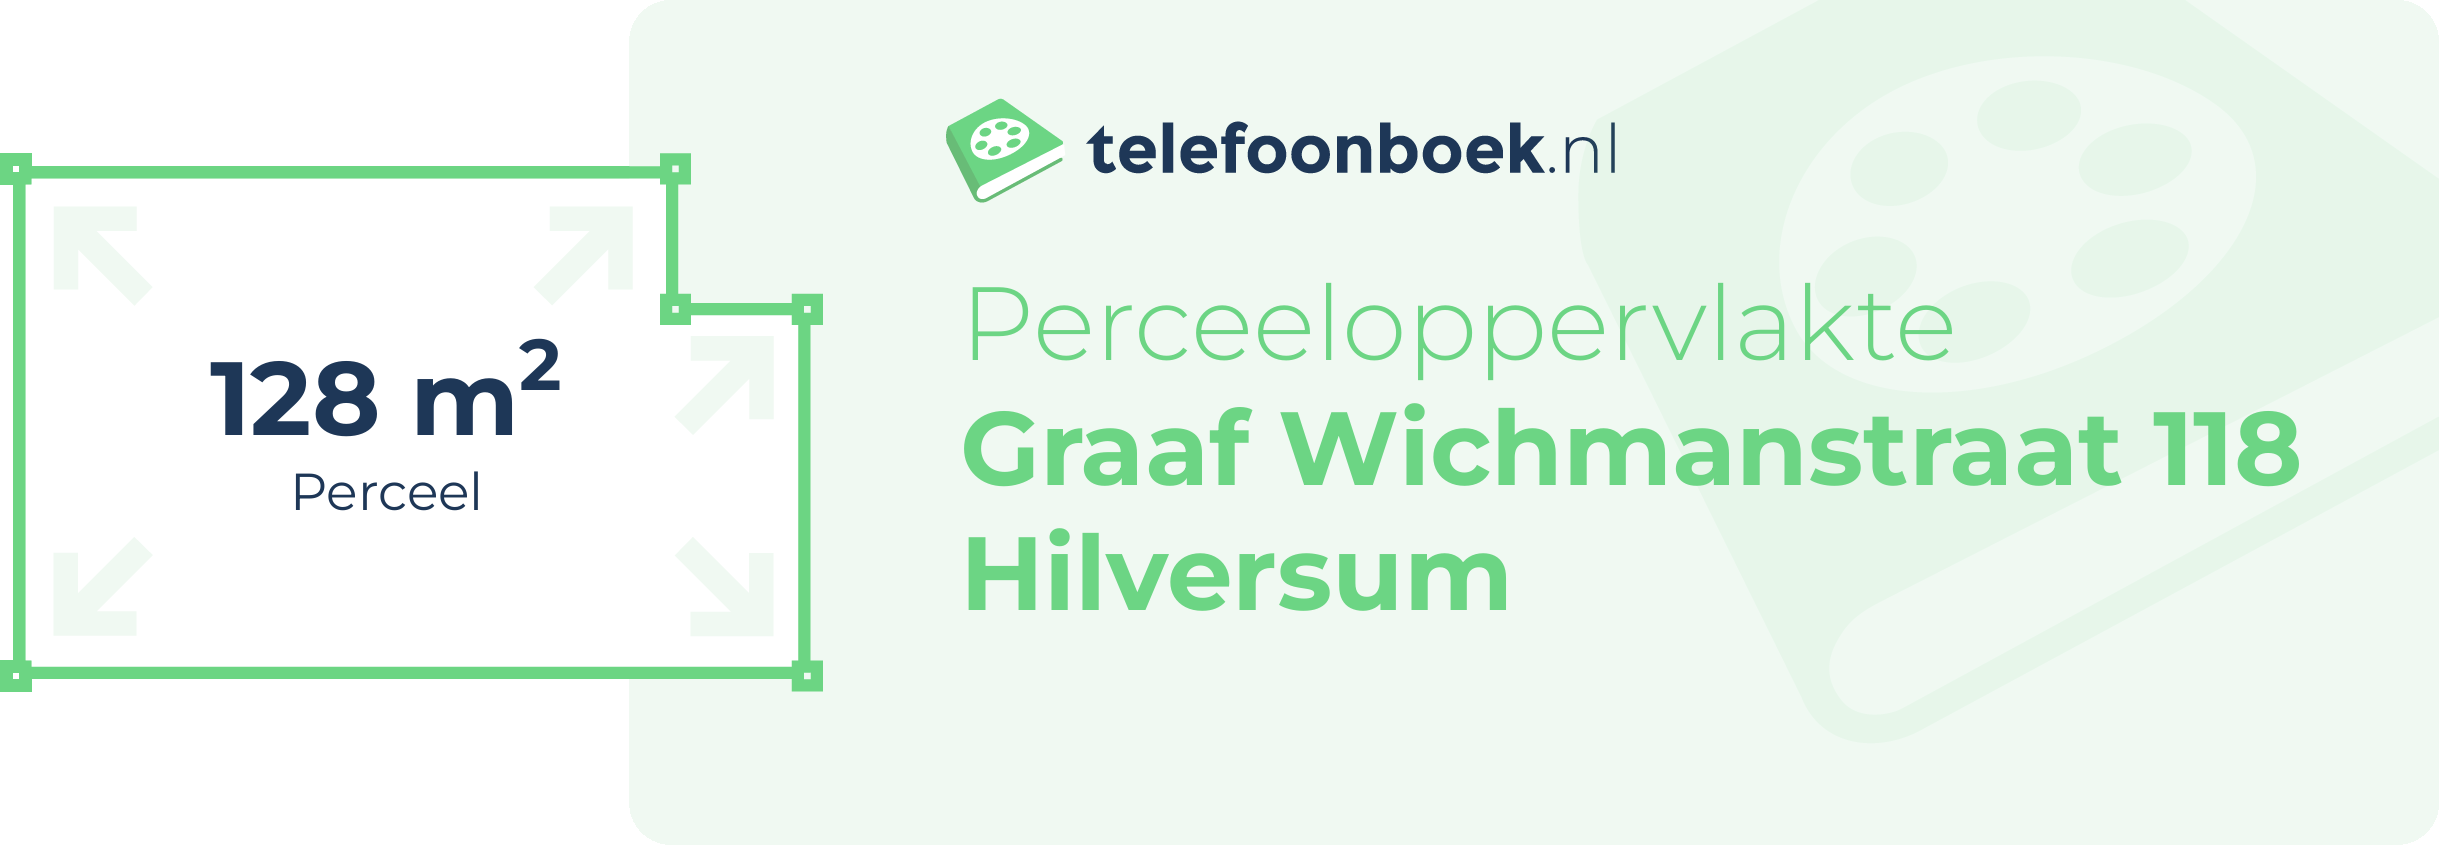 Perceeloppervlakte Graaf Wichmanstraat 118 Hilversum